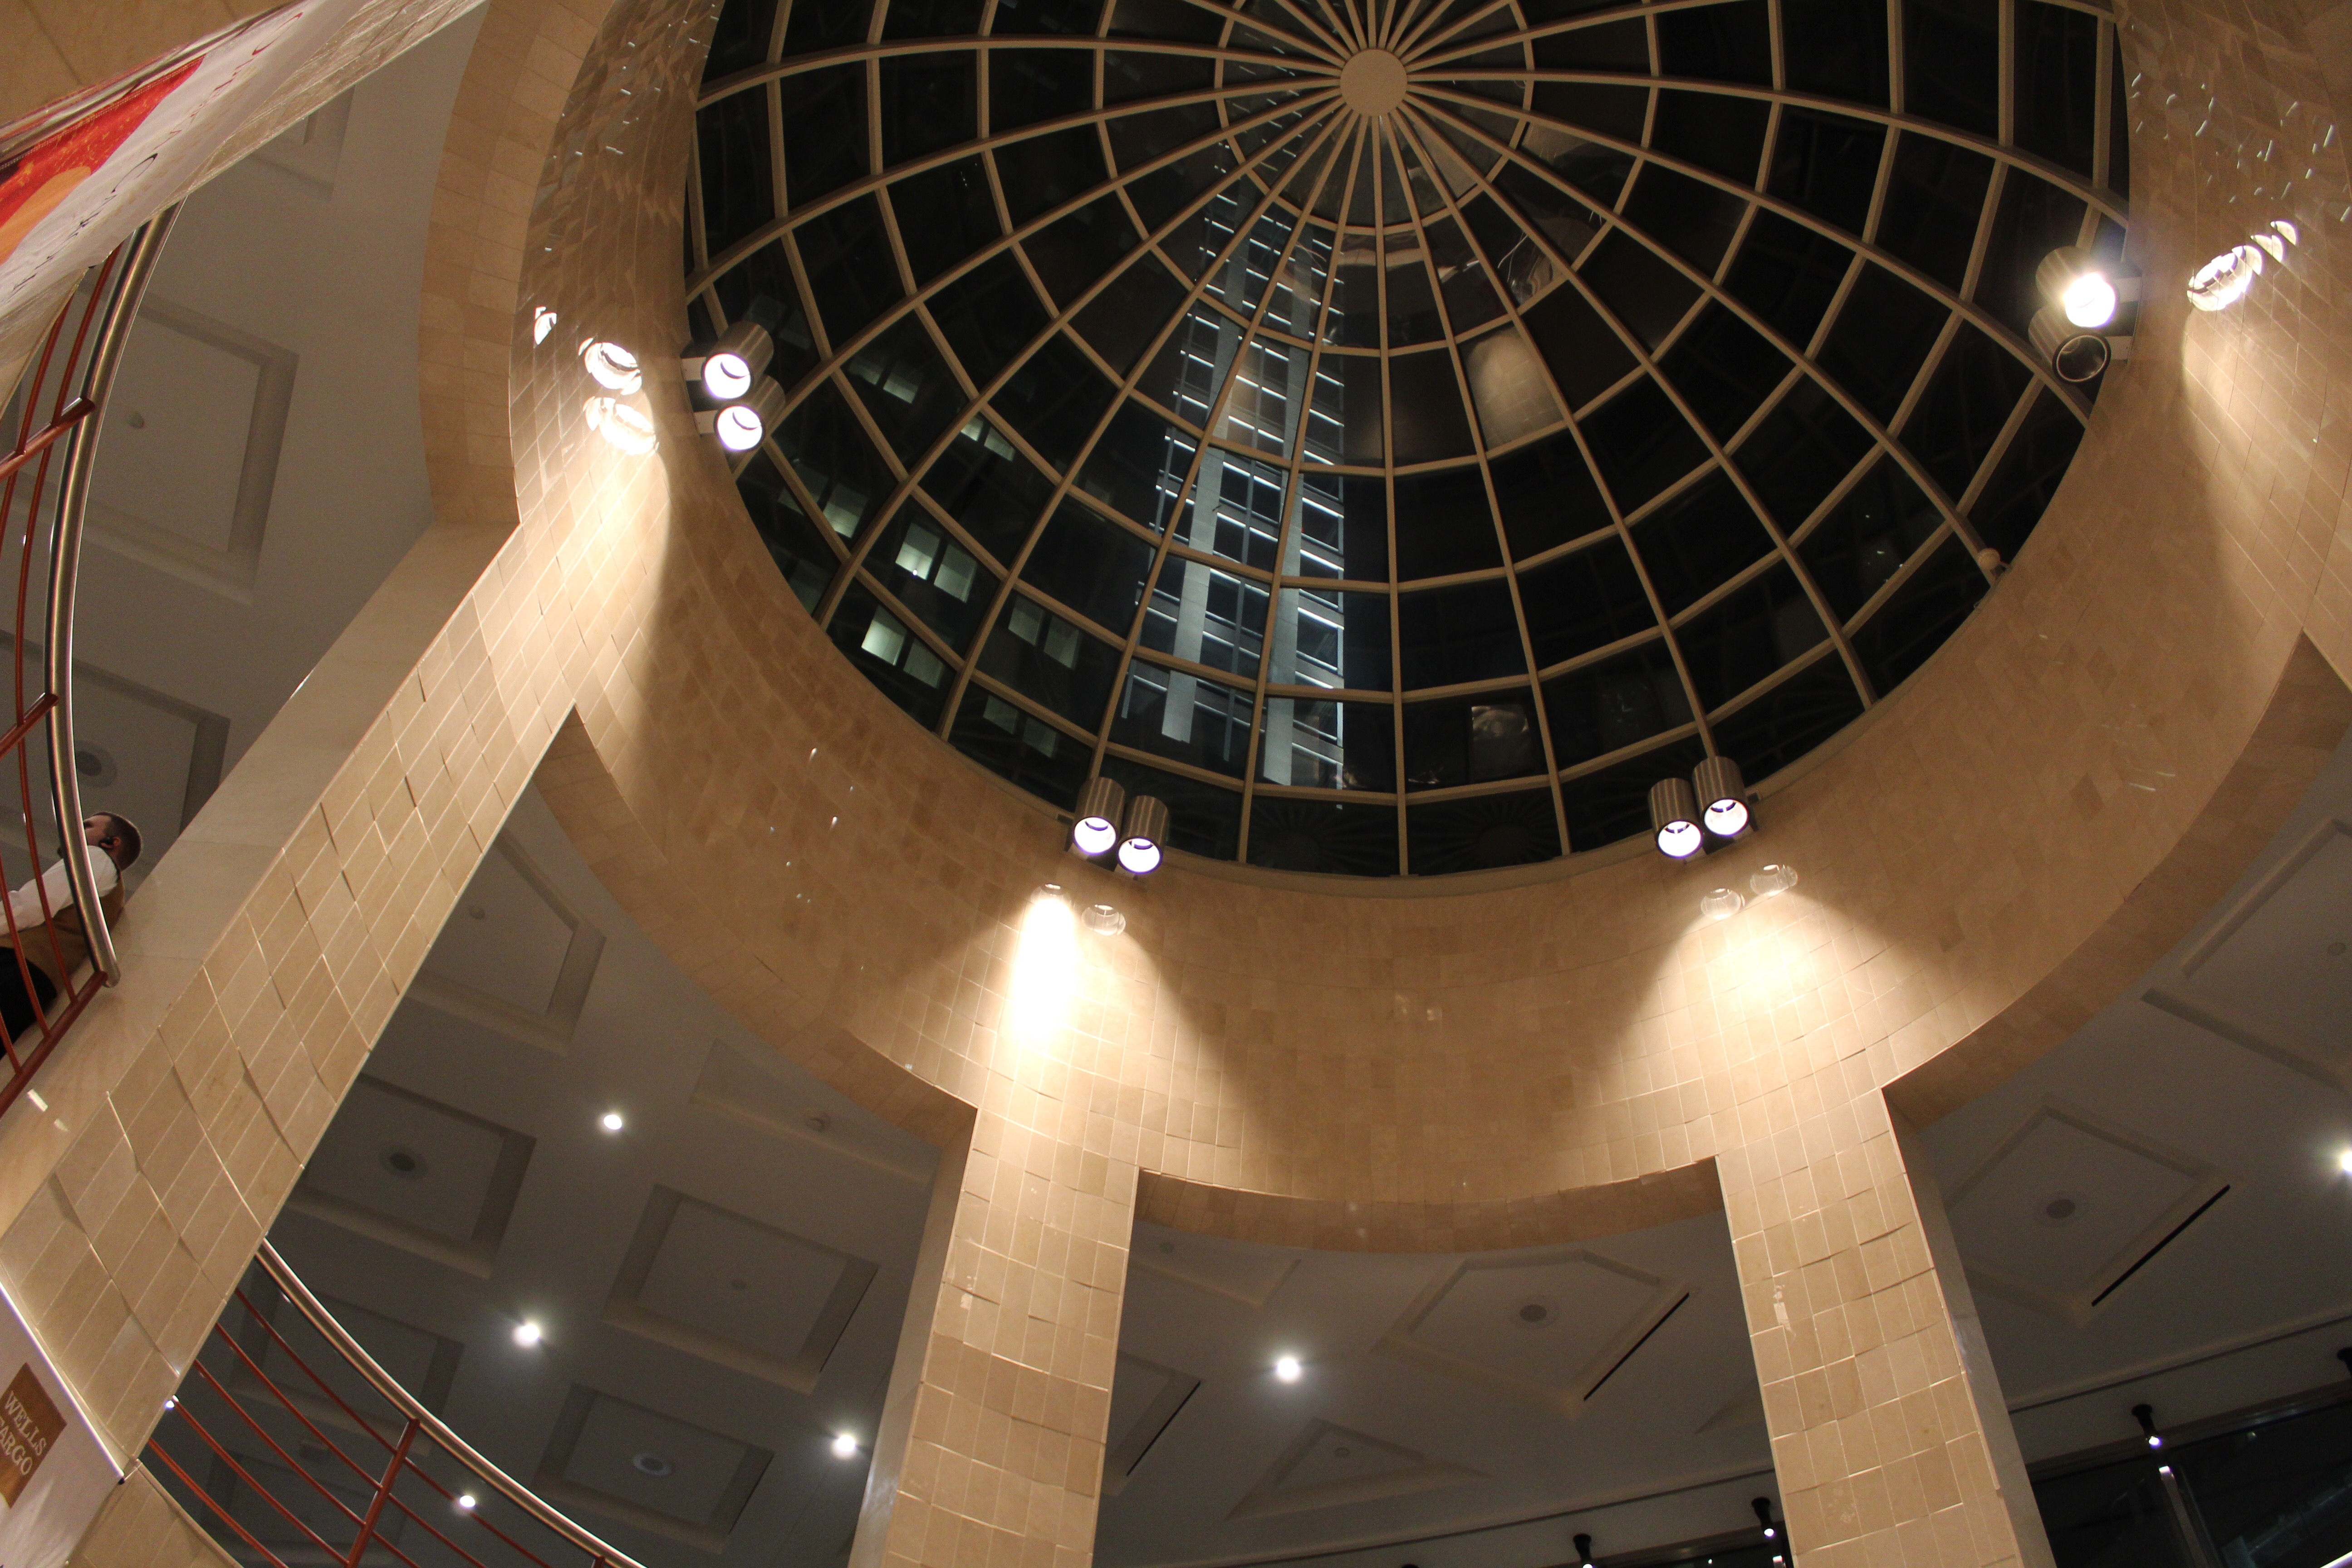 Atrium Dome inside the Blumenthal Performing Arts Center